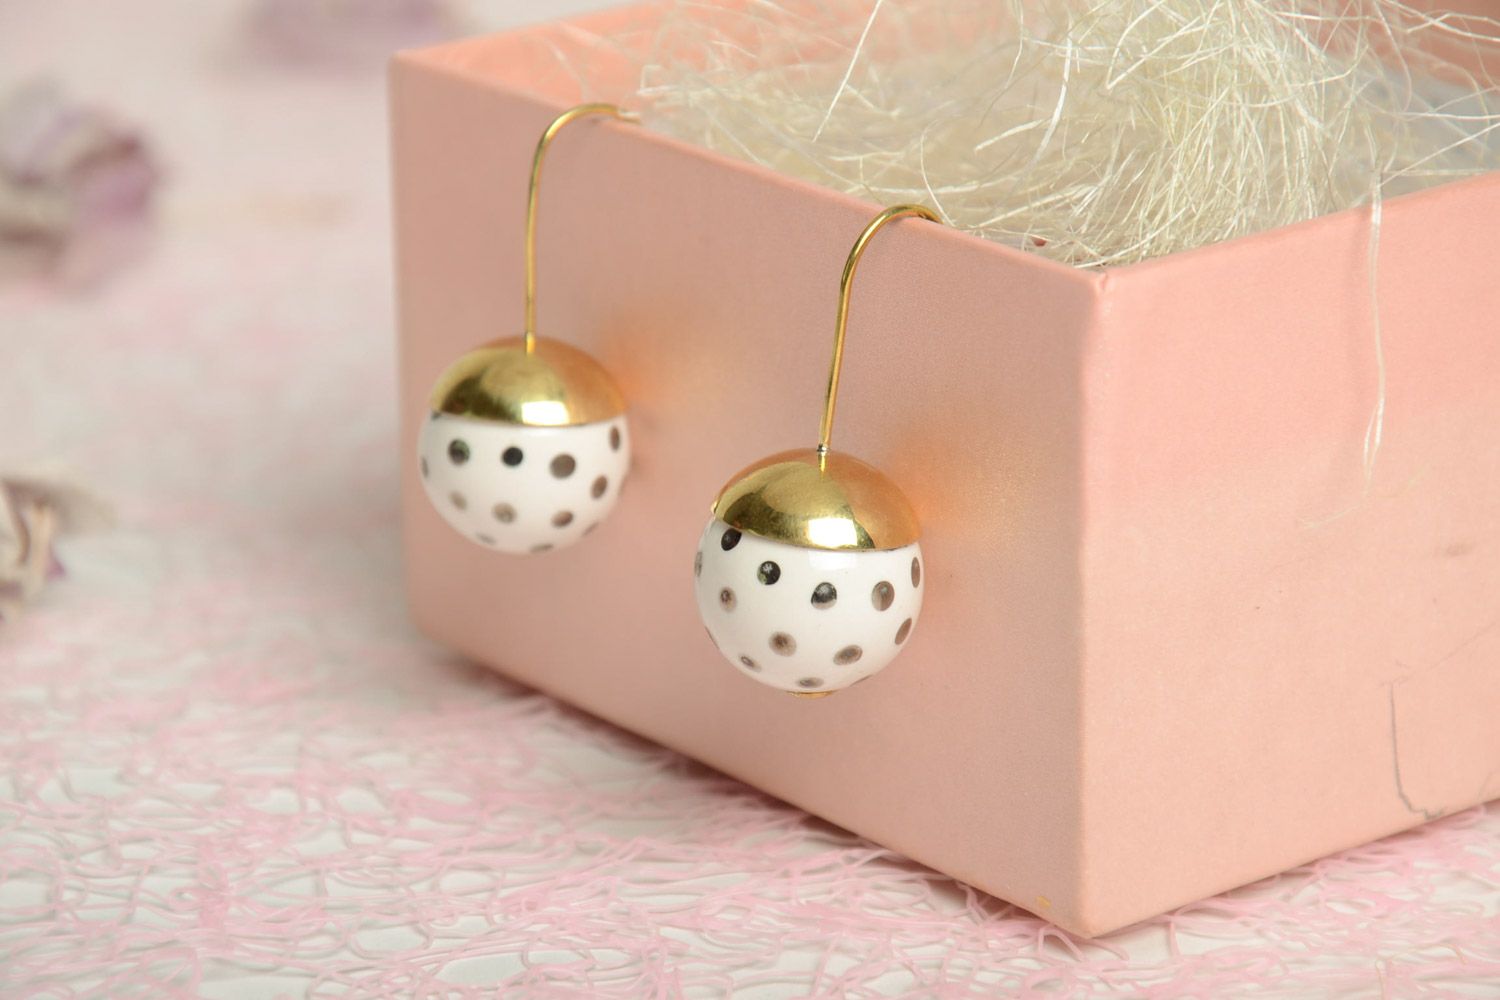 Handmade polka dot ceramic ball earrings in brass frame with long ear wires photo 1